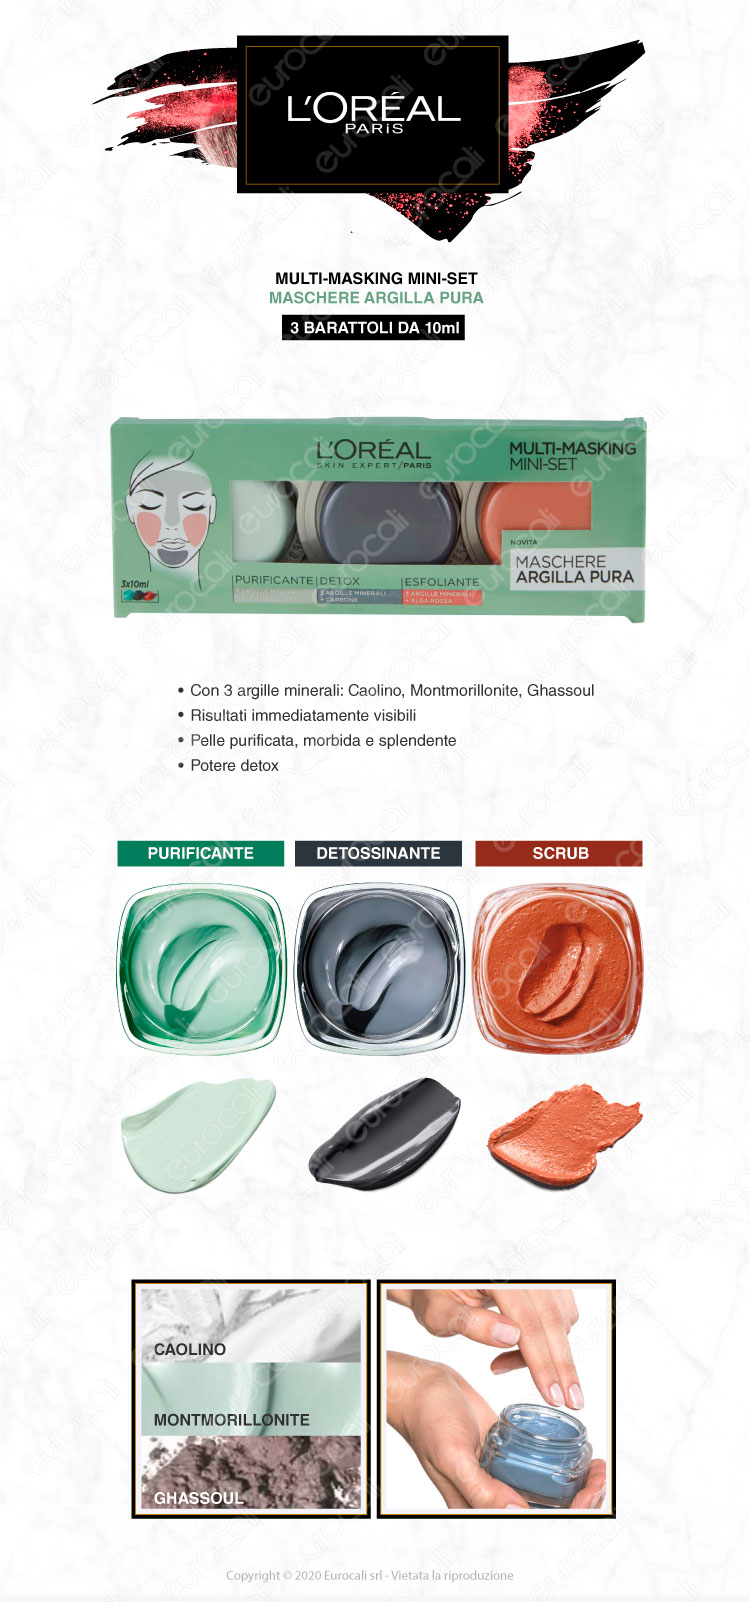 L'Oréal Paris Argilla Pura Multi-Masking Mini-Set Maschere Viso Purificante Detox Scrub 